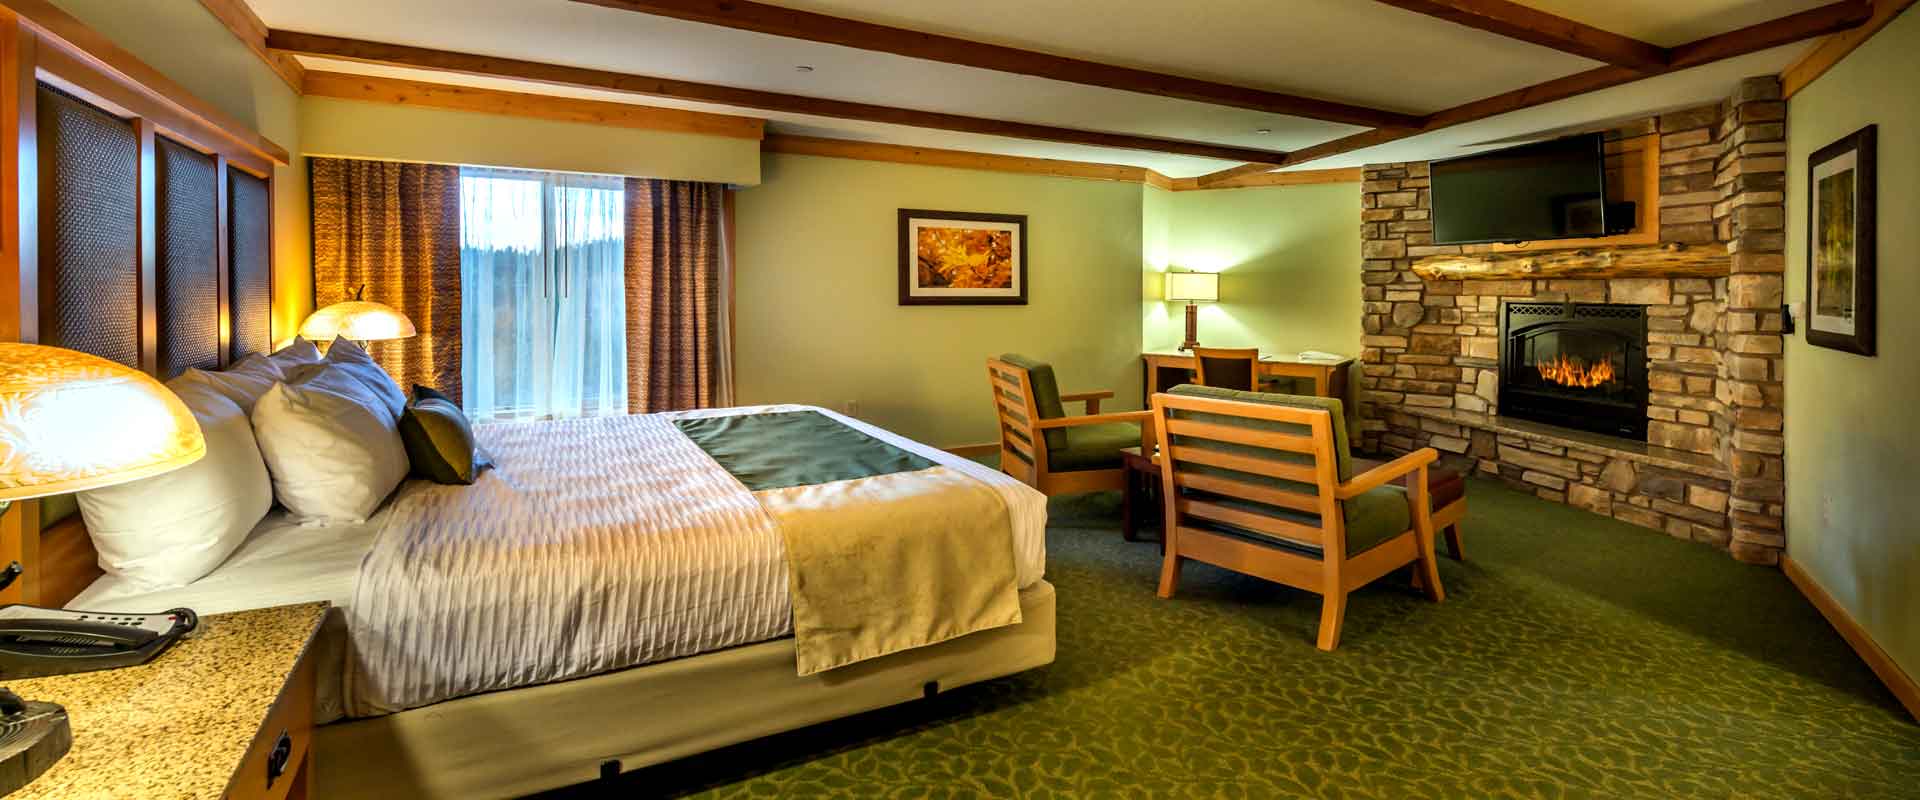 {HotelName} | {HotelCity} Budget Cheap Lodging Accommodations Hotels Motels